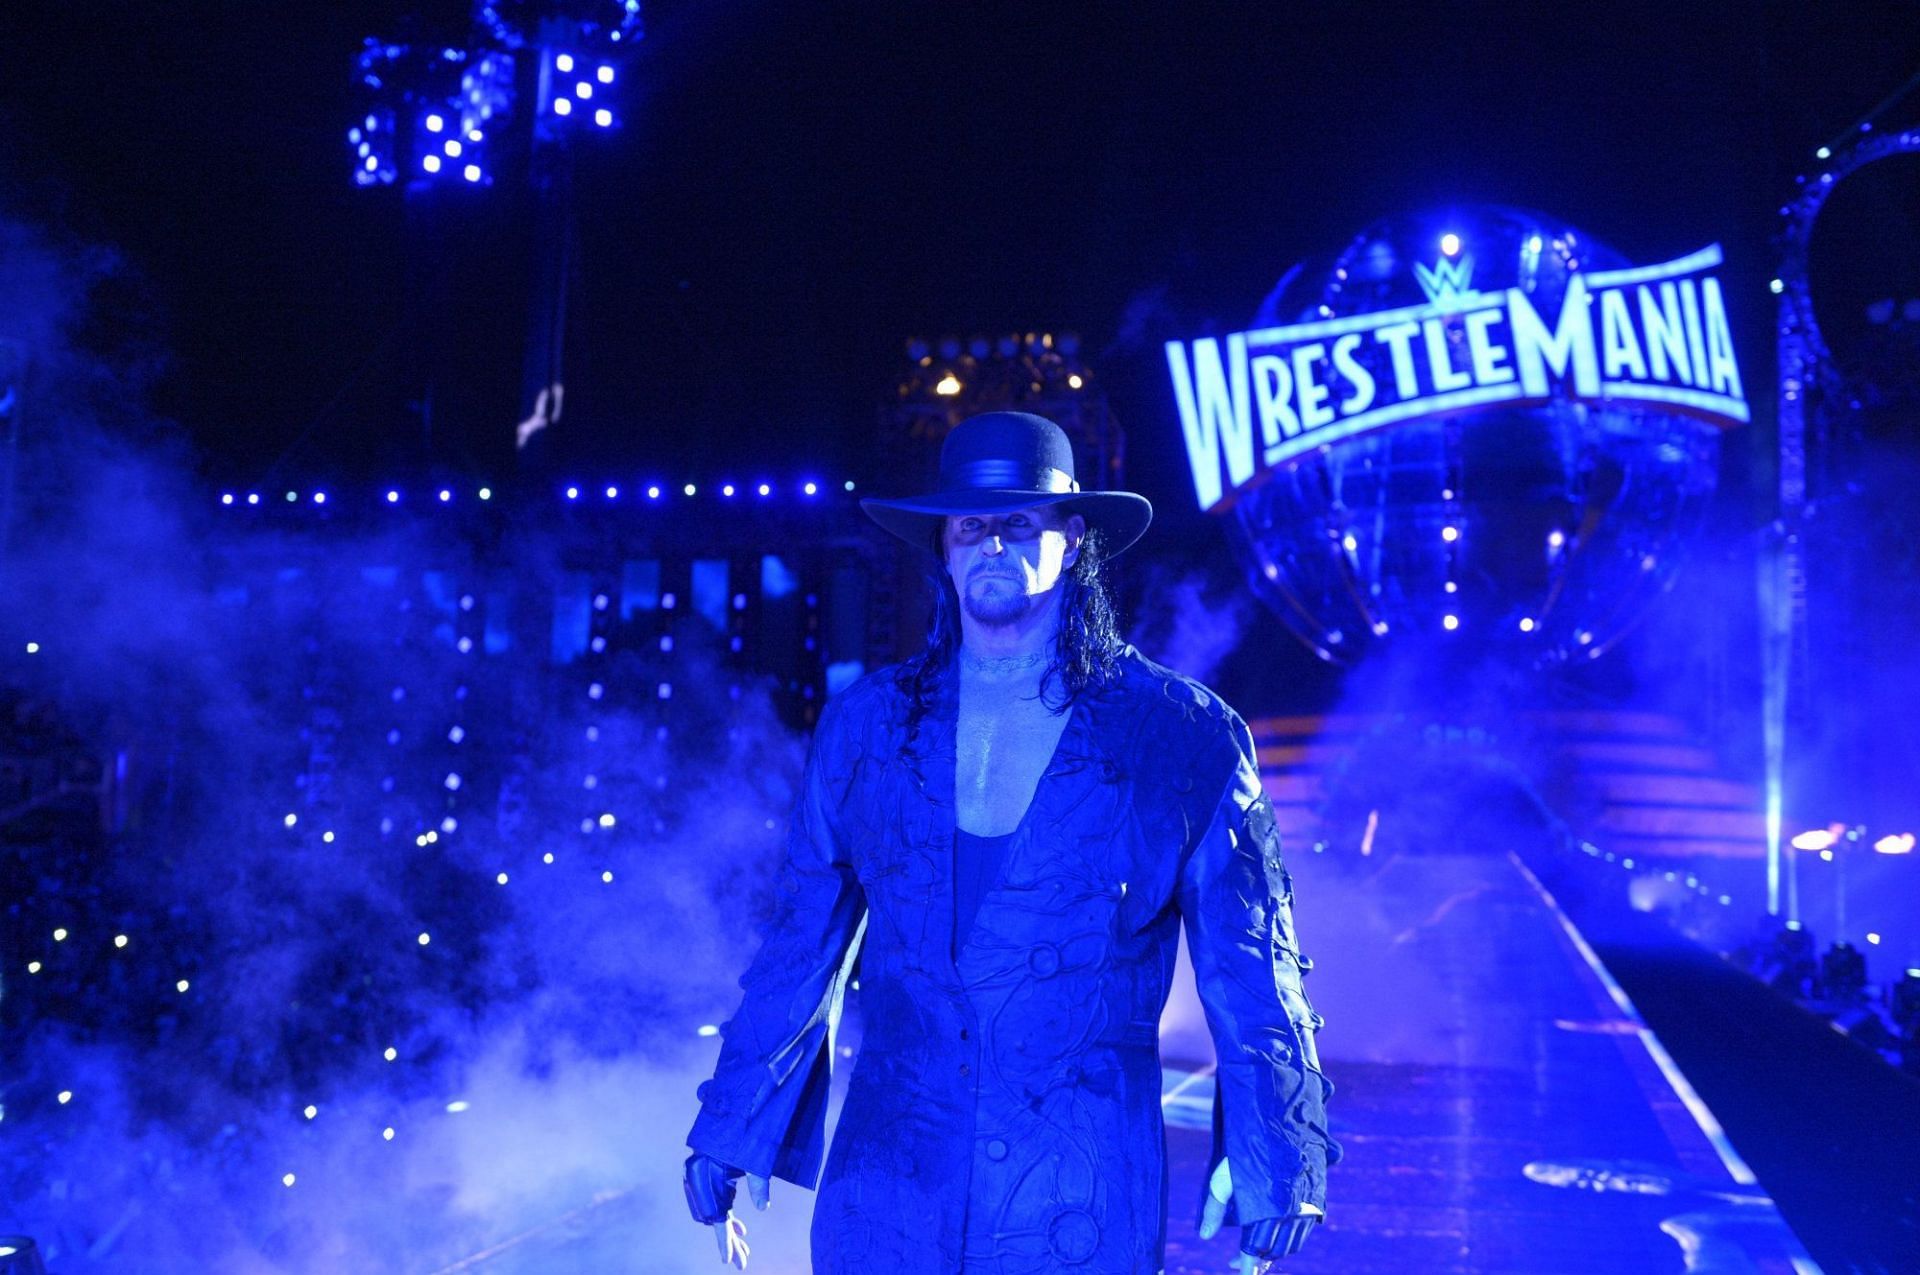 The Undertaker enjoyed a 21 match winning streak on Wrestlemania.